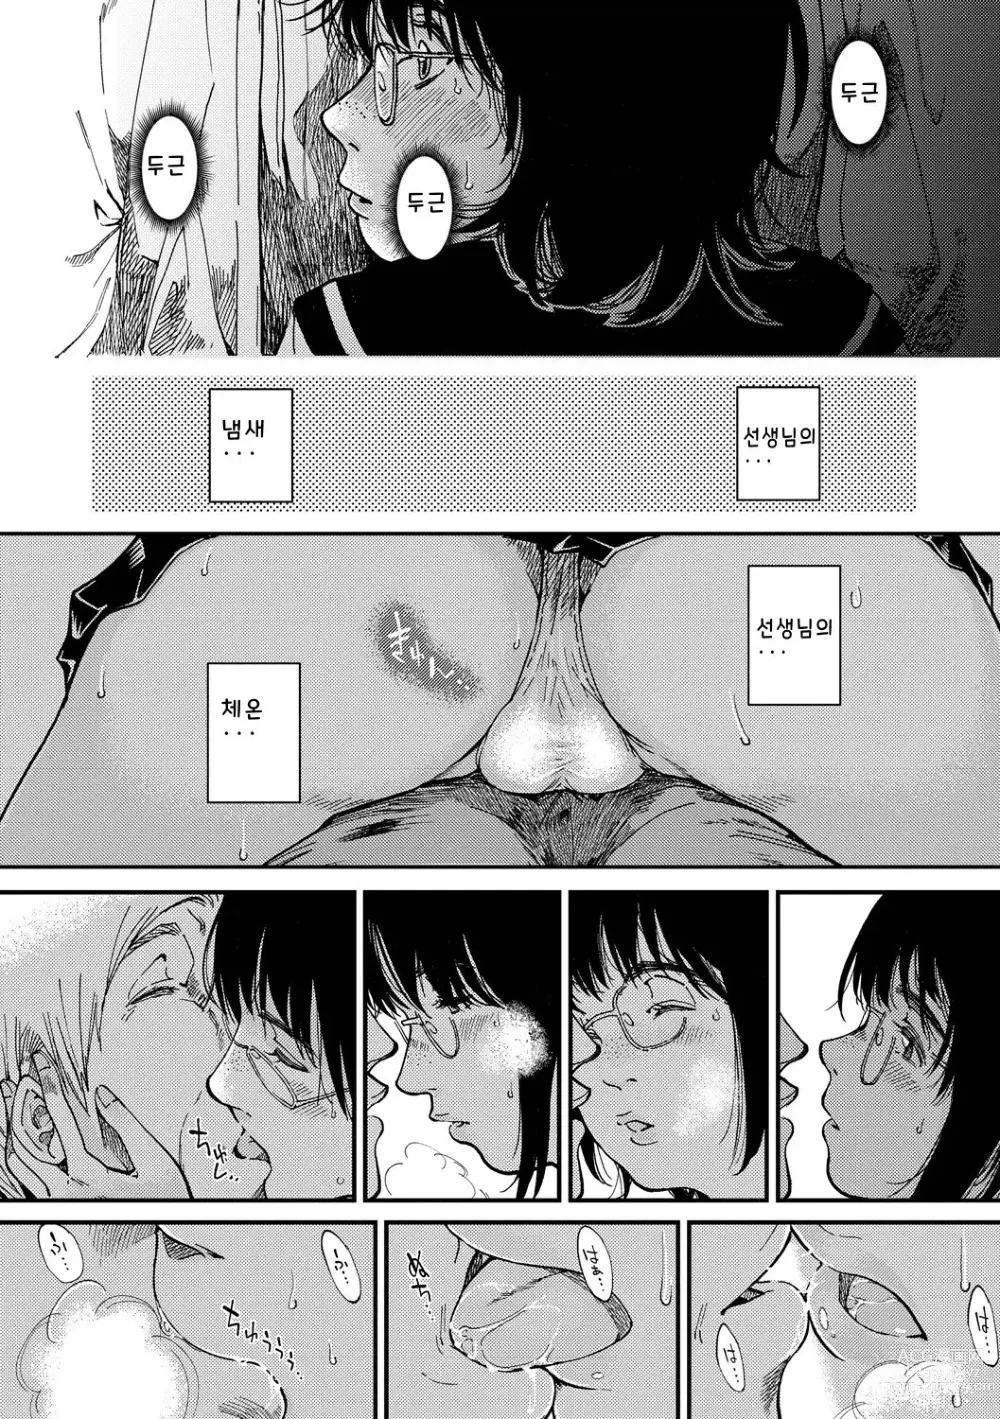 Page 16 of manga Mezame